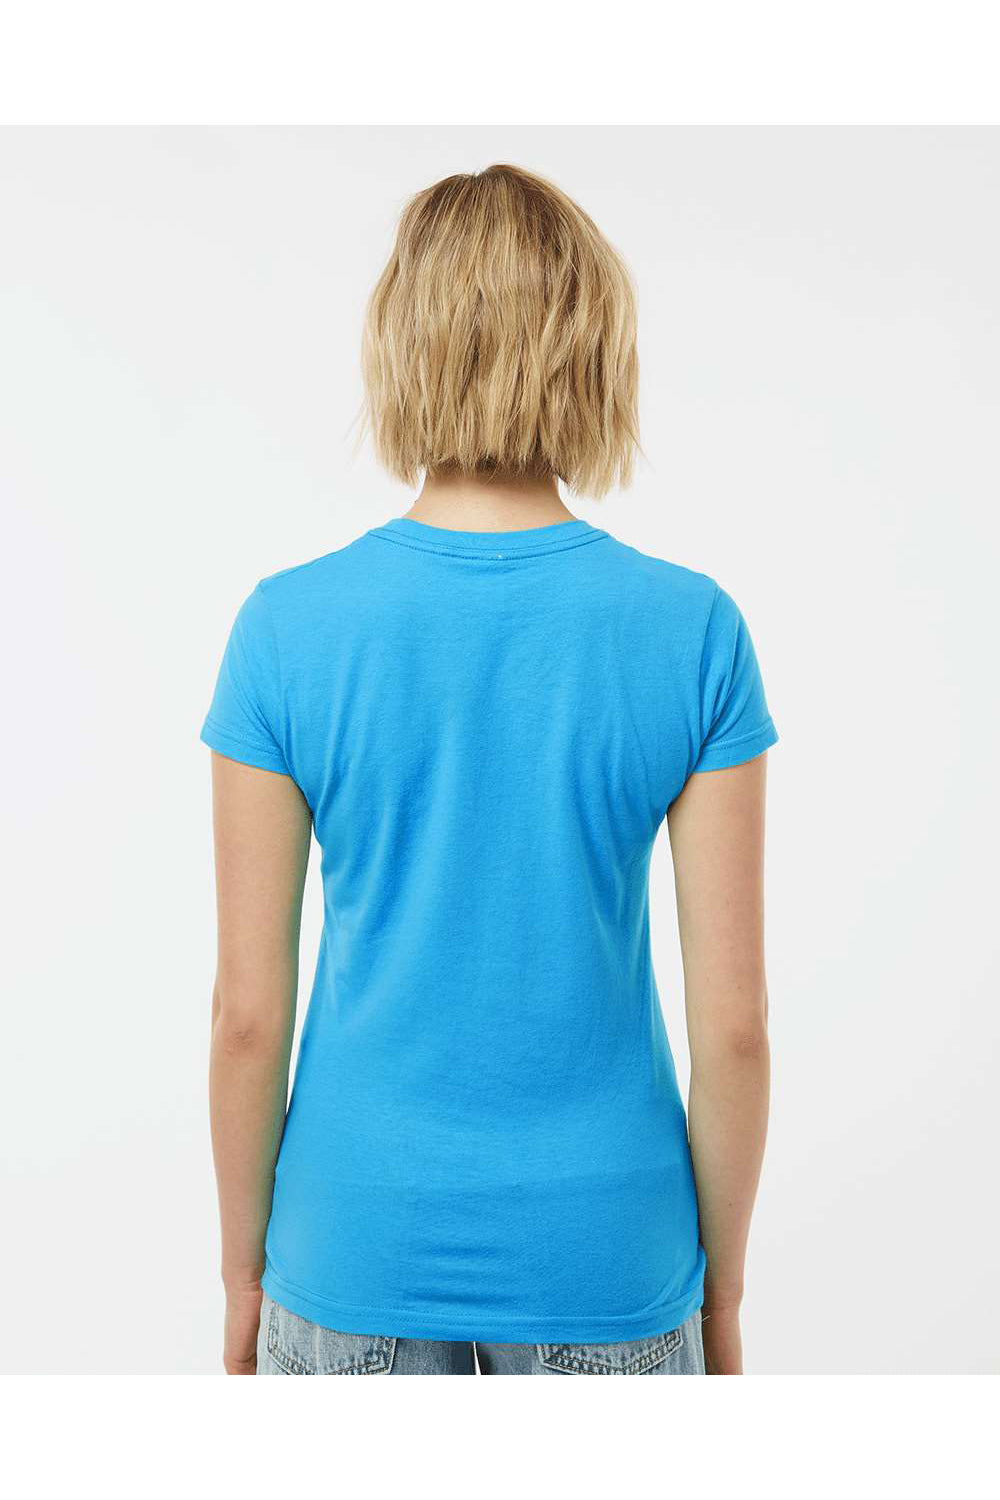 Tultex 213 Womens Fine Jersey Slim Fit Short Sleeve Crewneck T-Shirt Turquoise Blue Model Back